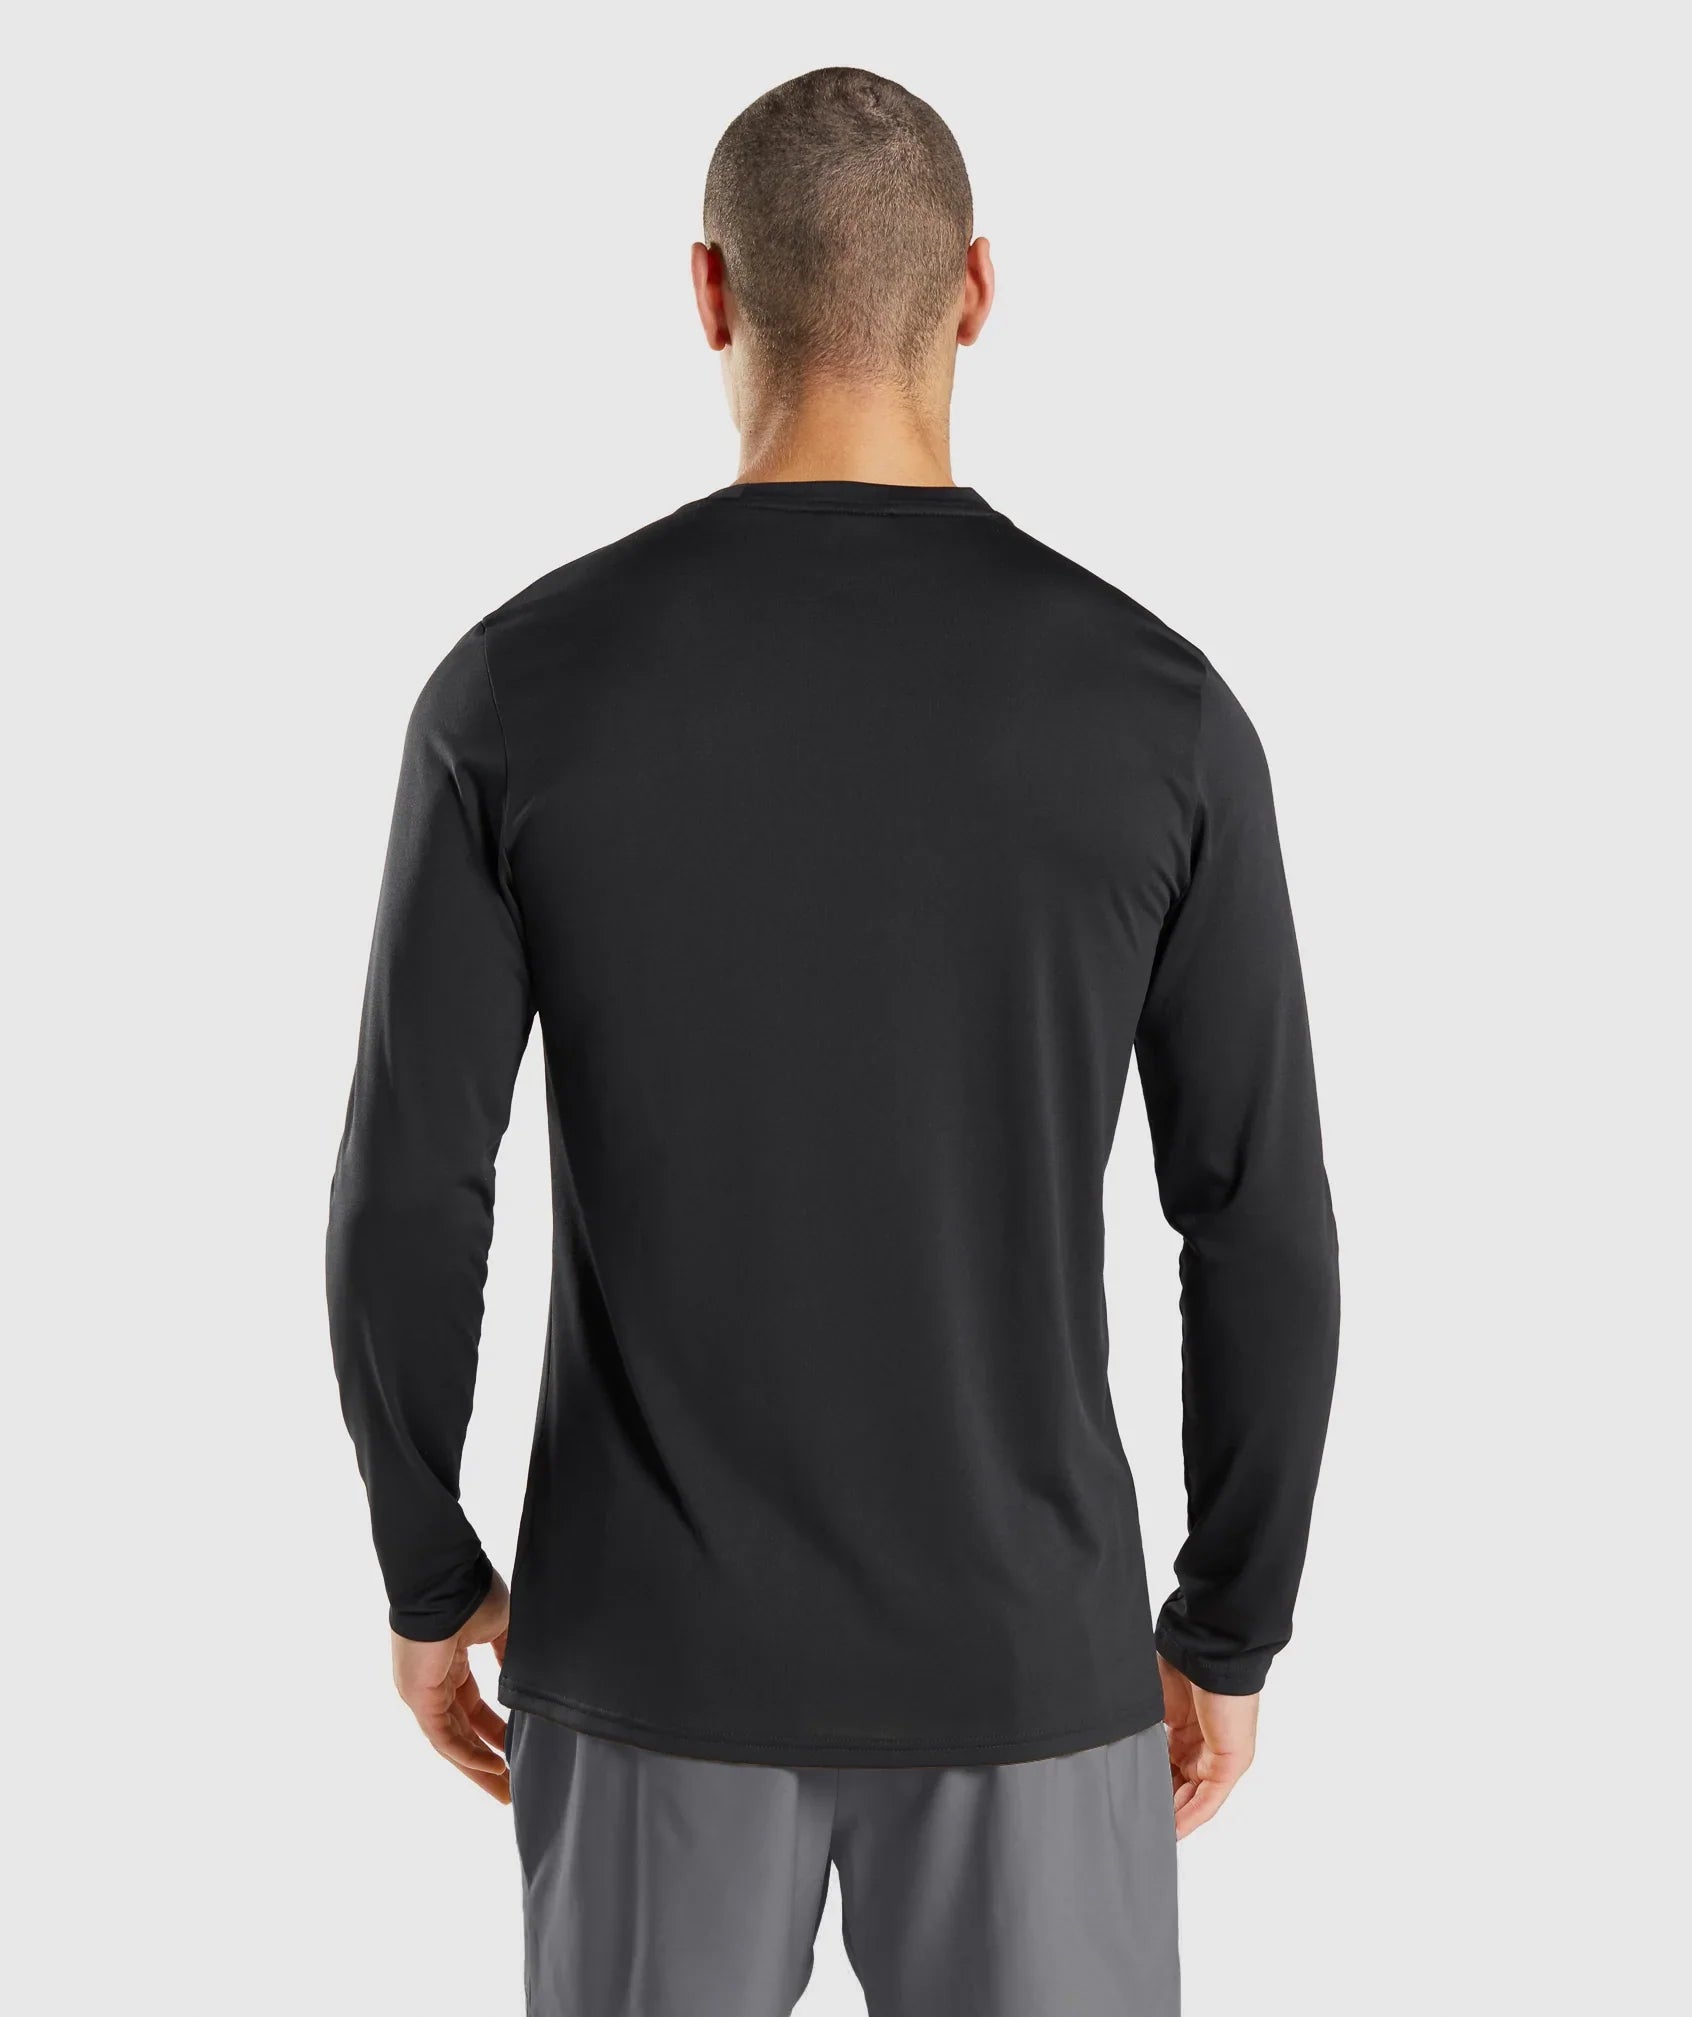 Gymshark Fleece Lined Long Sleeve Top - Black/Pitch Grey